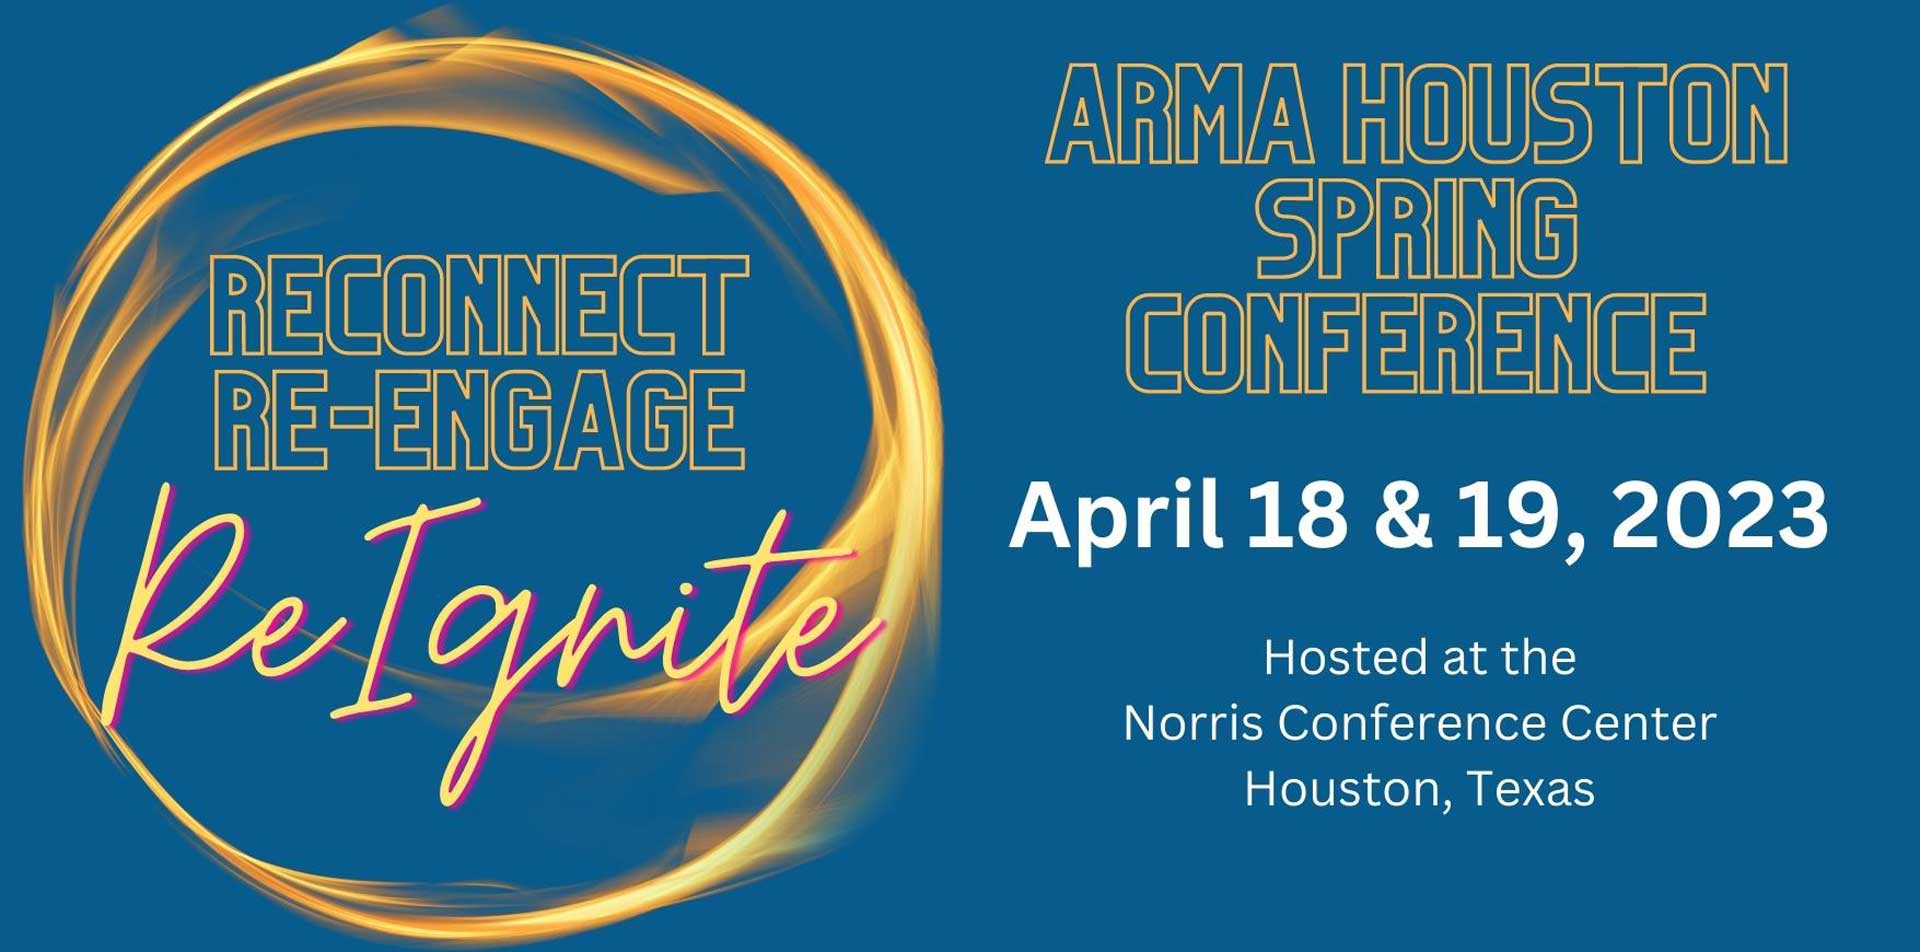 ARMA Houston Conference 2023 FileTrail